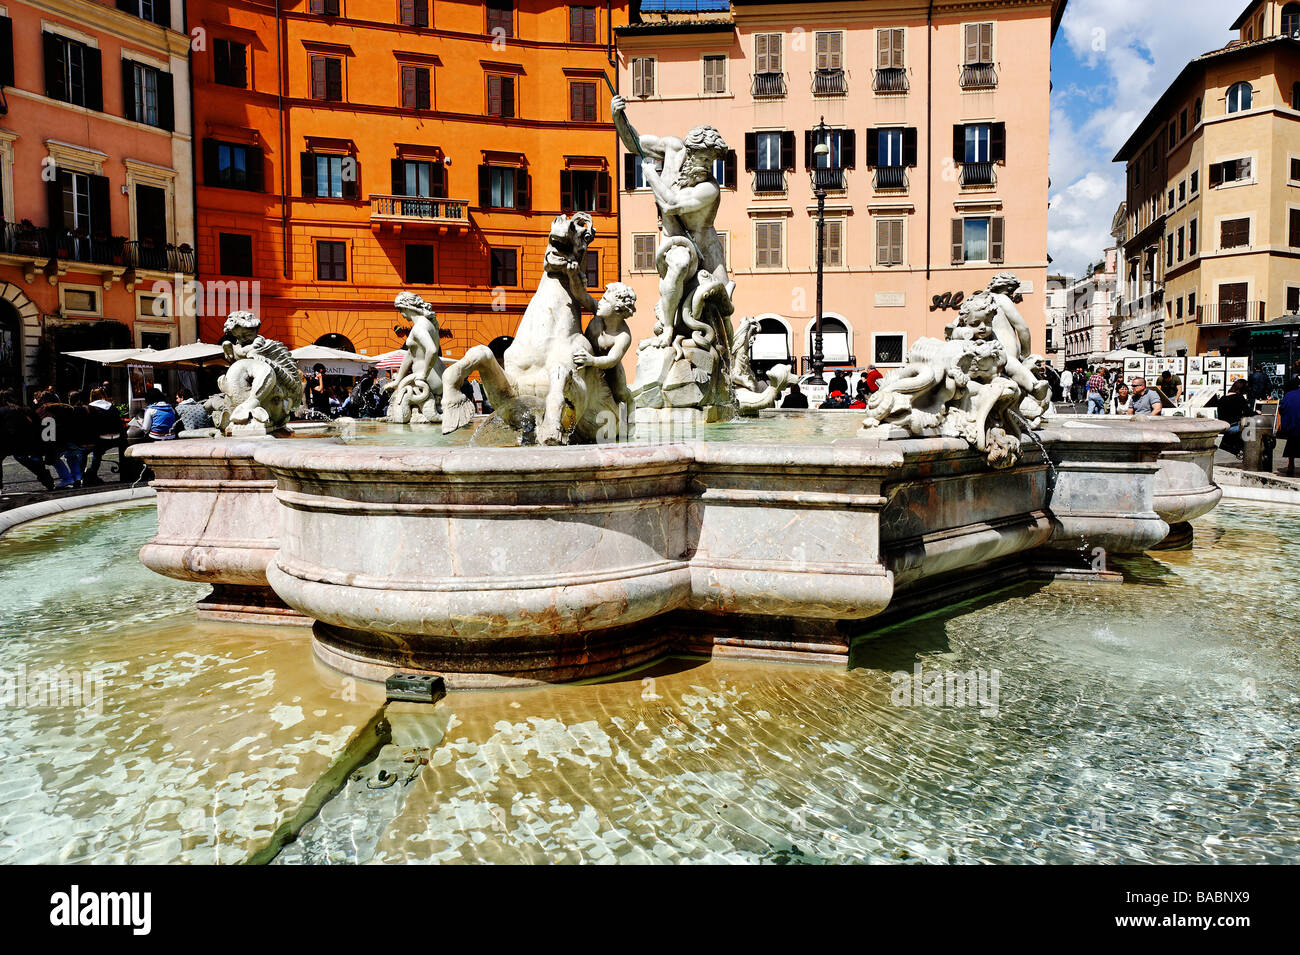 Piazza Navona Fontana del Tritone Stock Photo